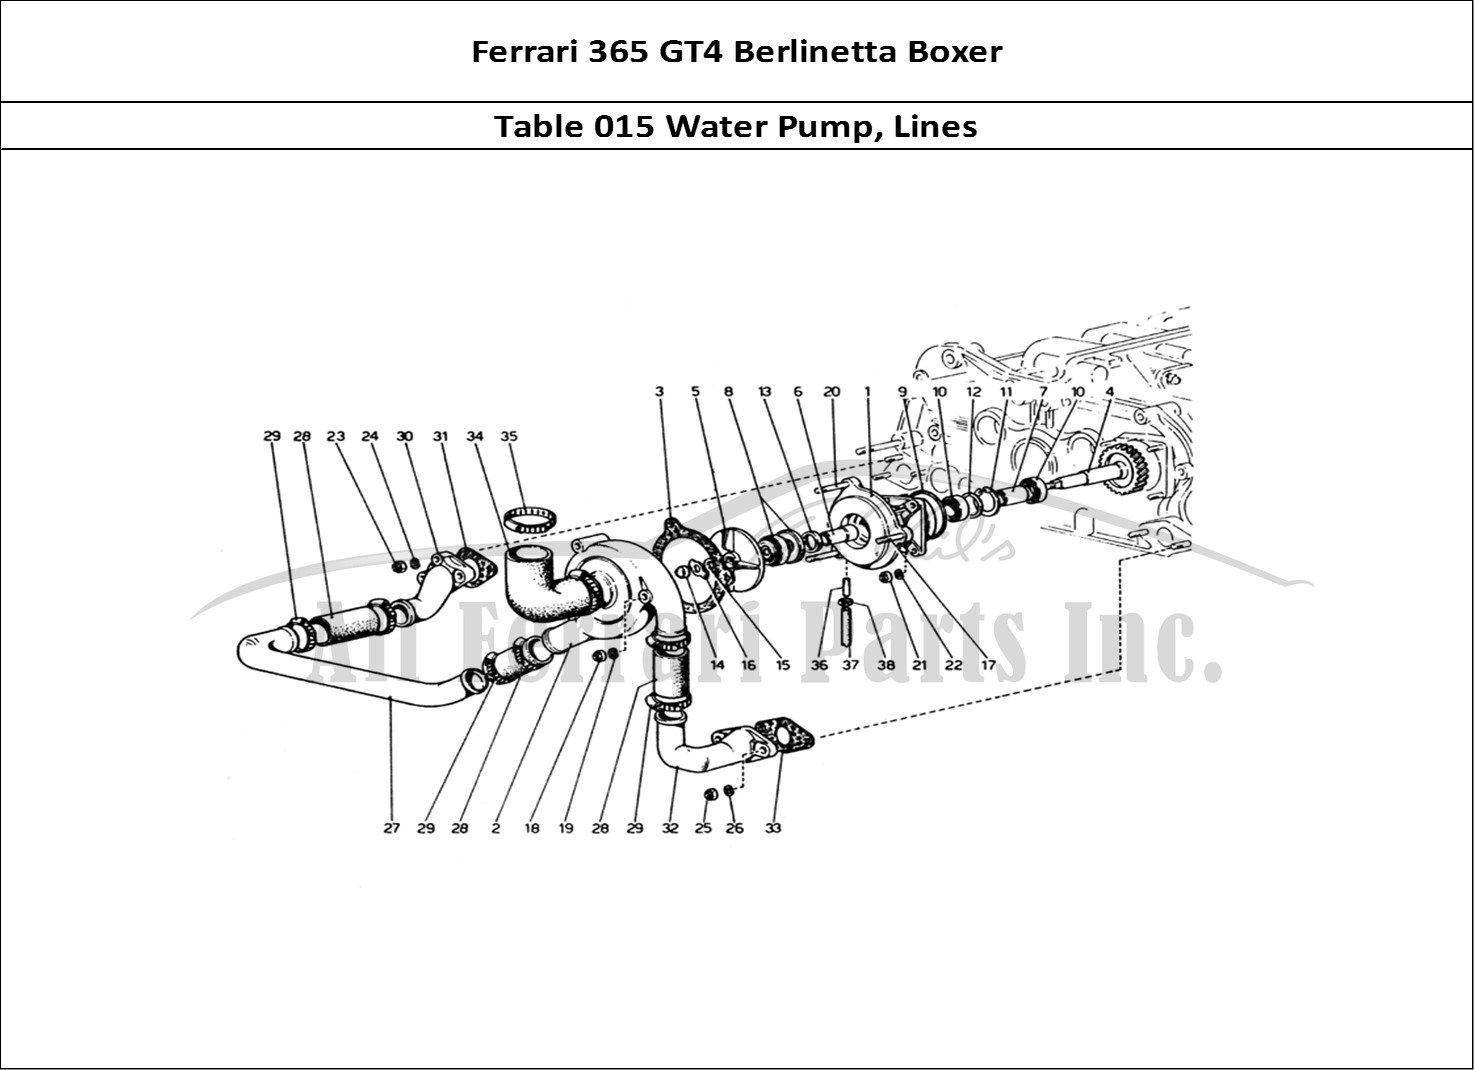 Ferrari Parts Ferrari 365 GT4 Berlinetta Boxer Page 015 Water Pump and Pipes